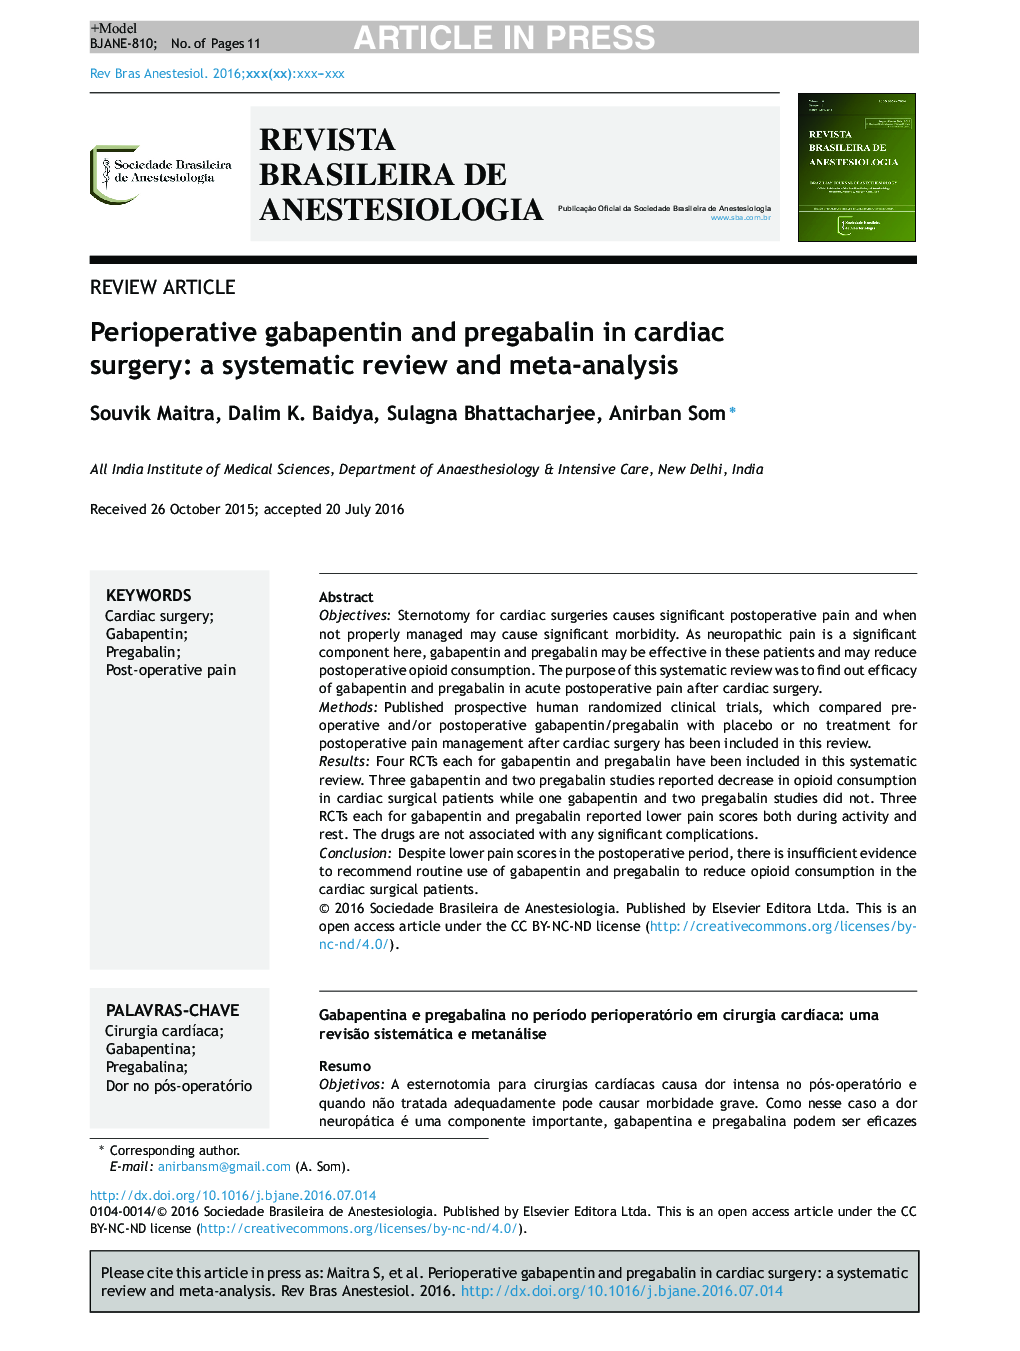 Perioperative gabapentin and pregabalin in cardiac surgery: a systematic review and meta-analysis